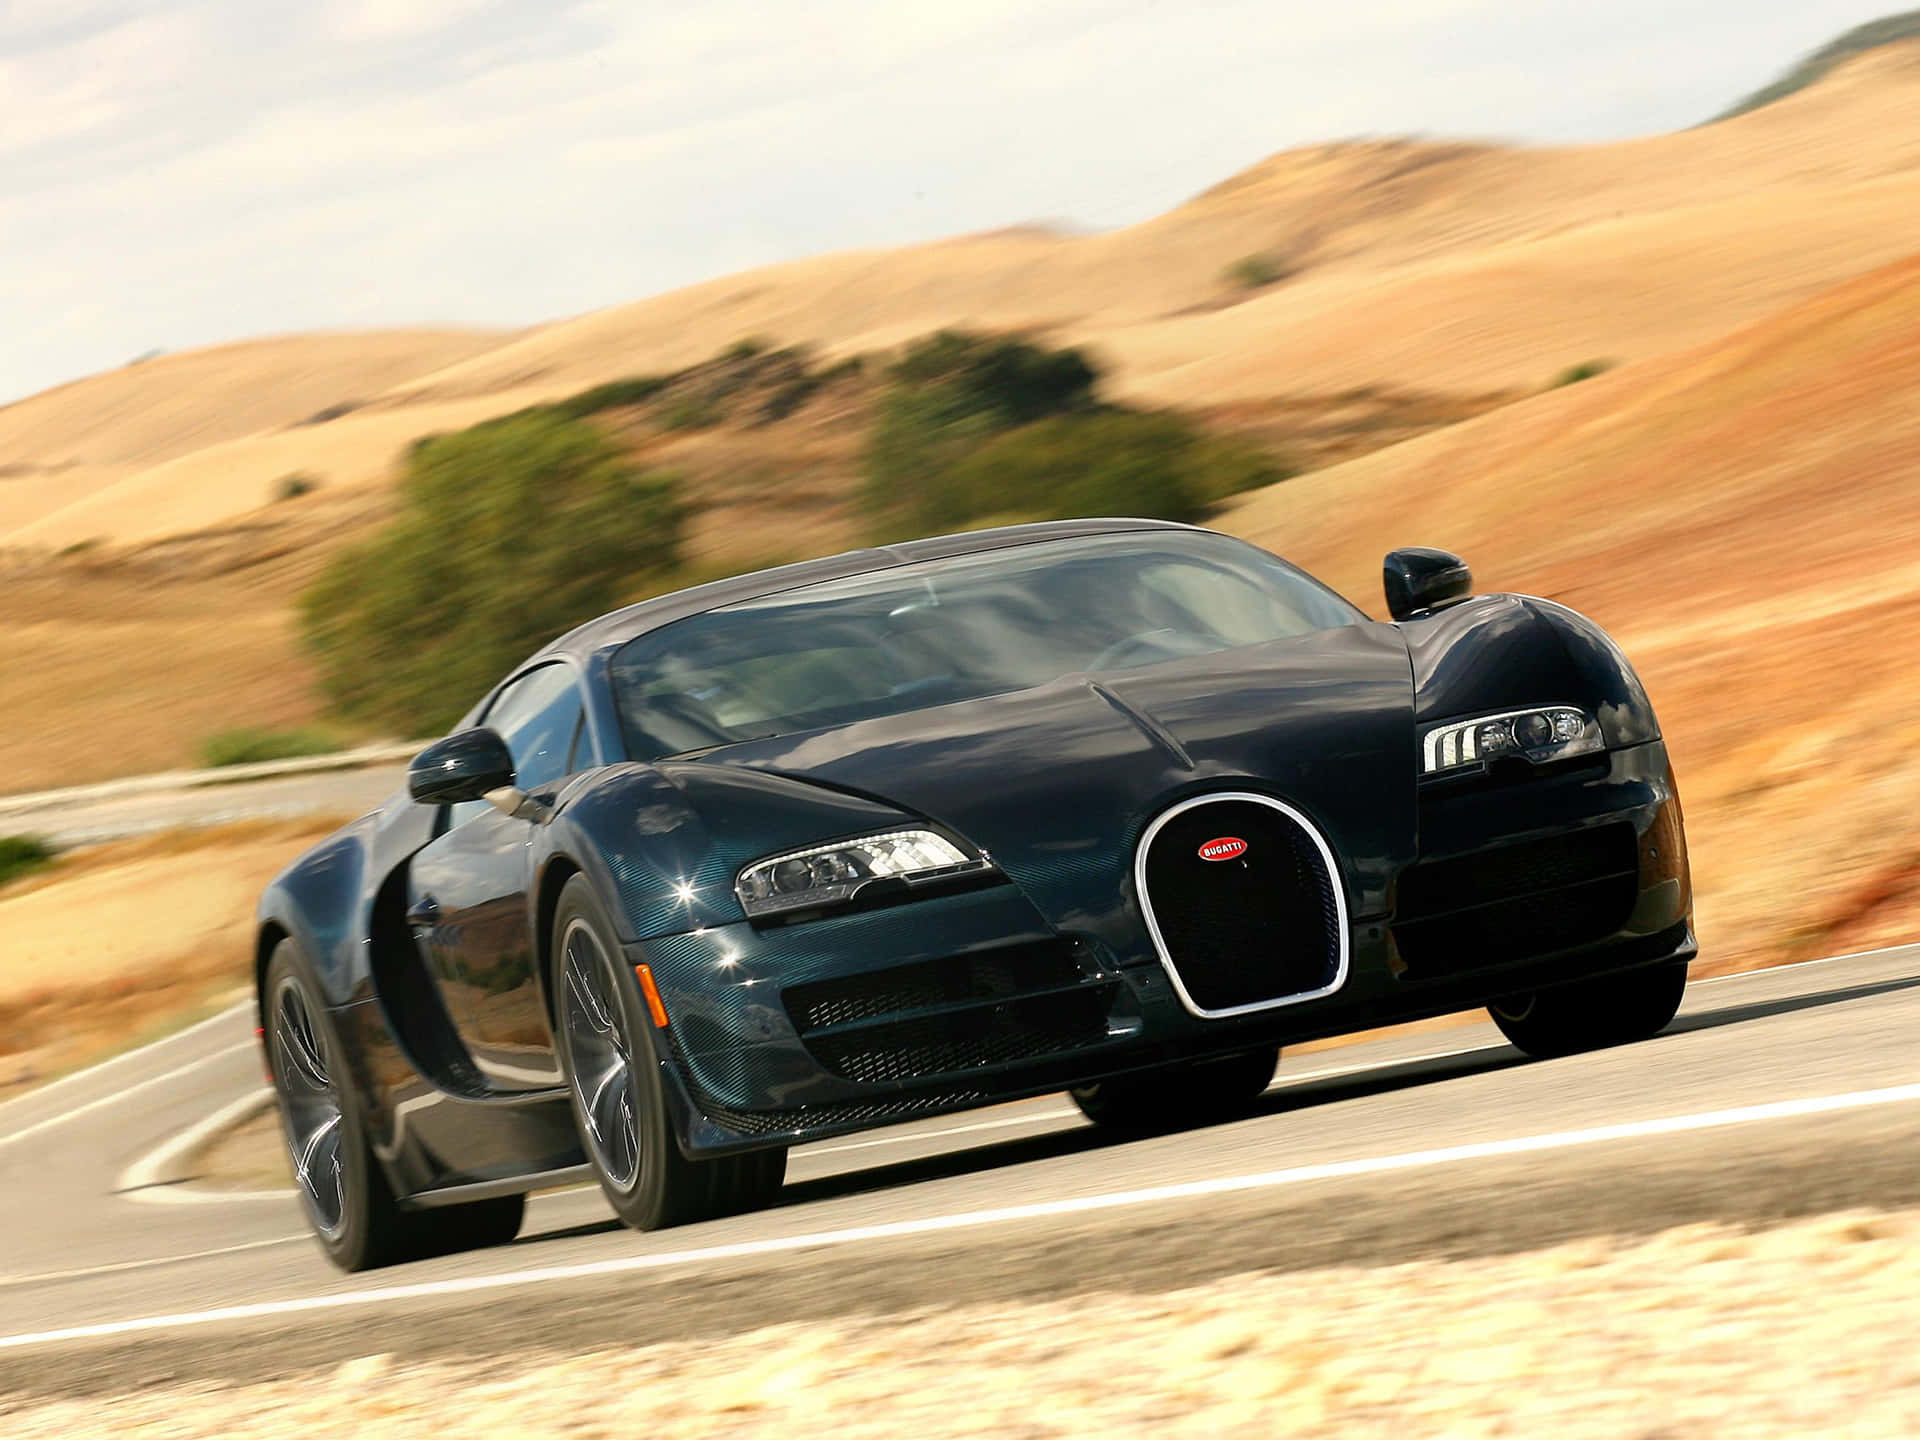 Sleek Bugatti Veyron Cruising the Open Road Wallpaper